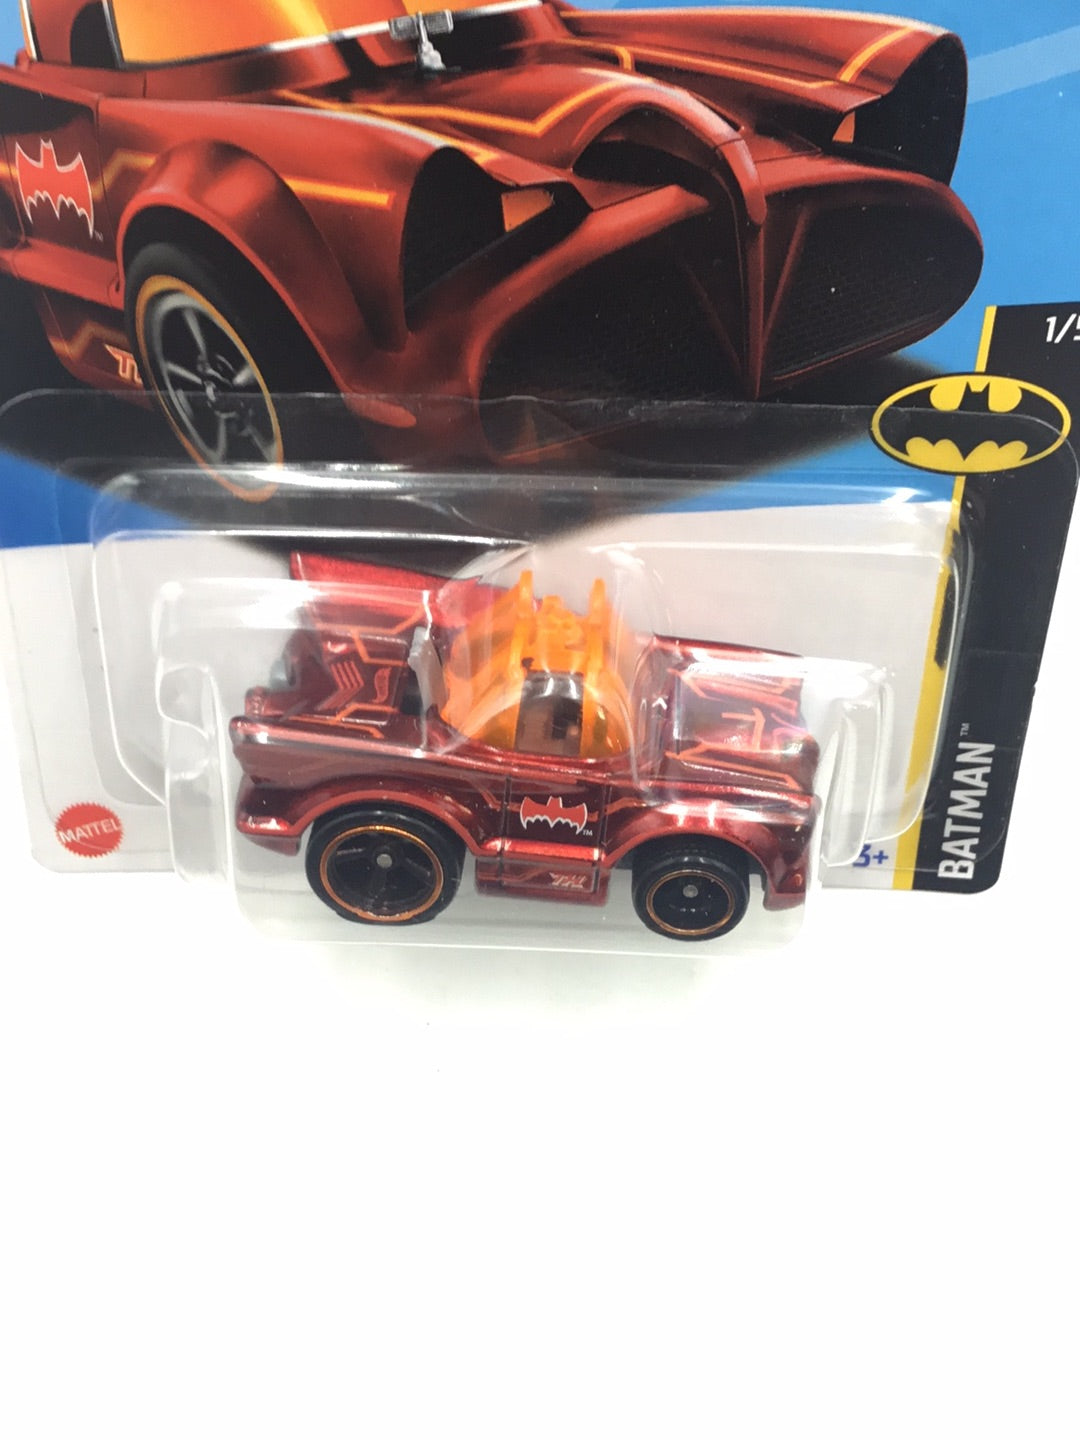 2023 hot wheels Super Treasure hunt #3 Classic TV Series Batmobile with Protector